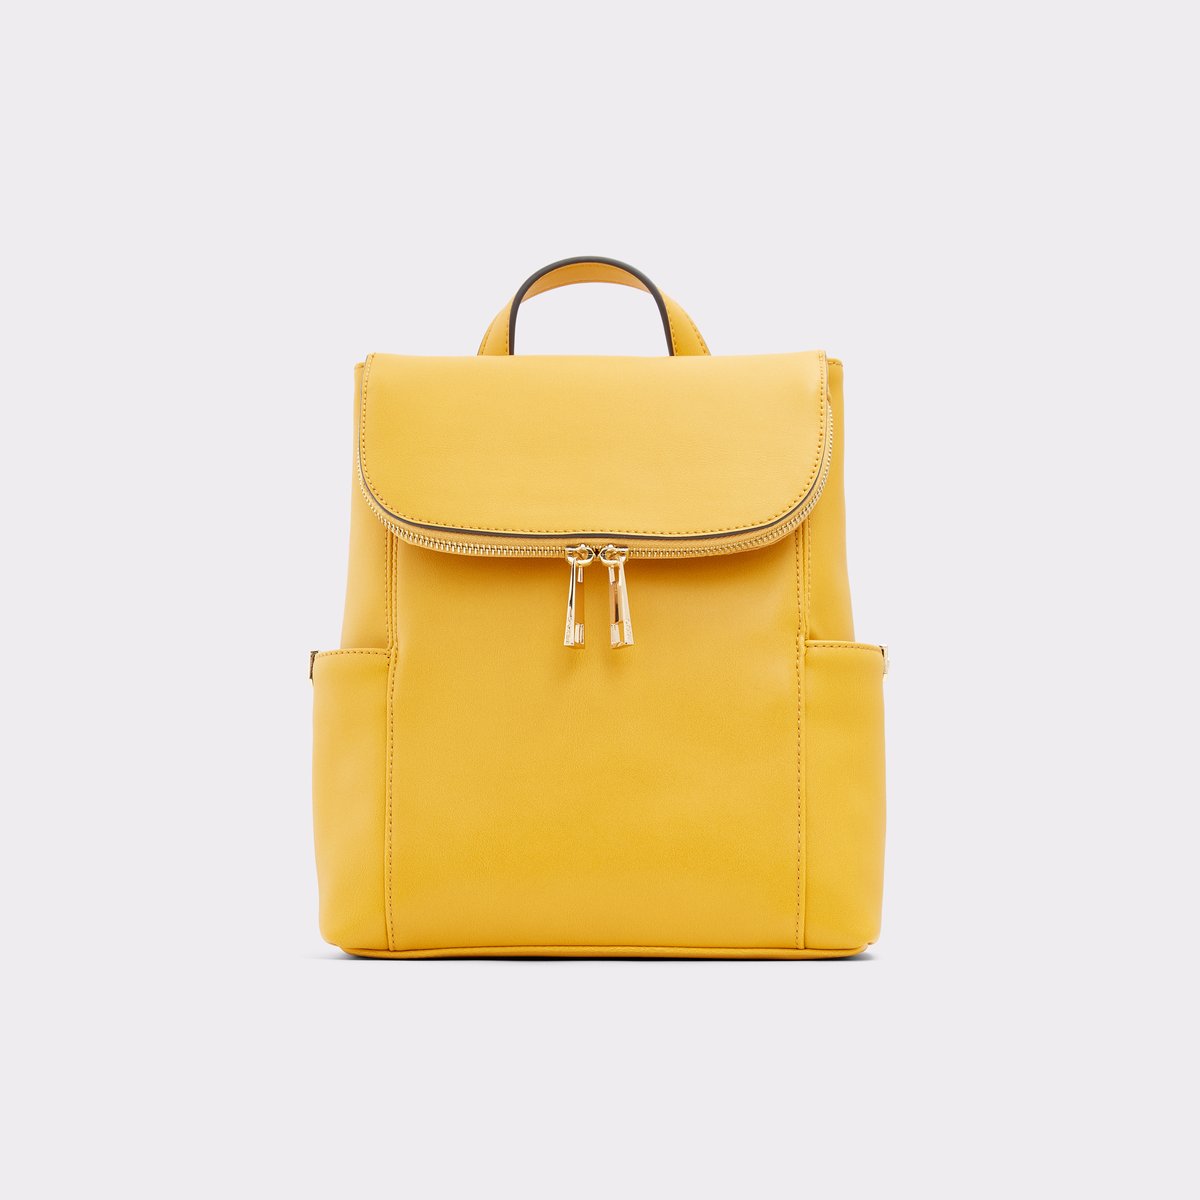 aldo yellow bag